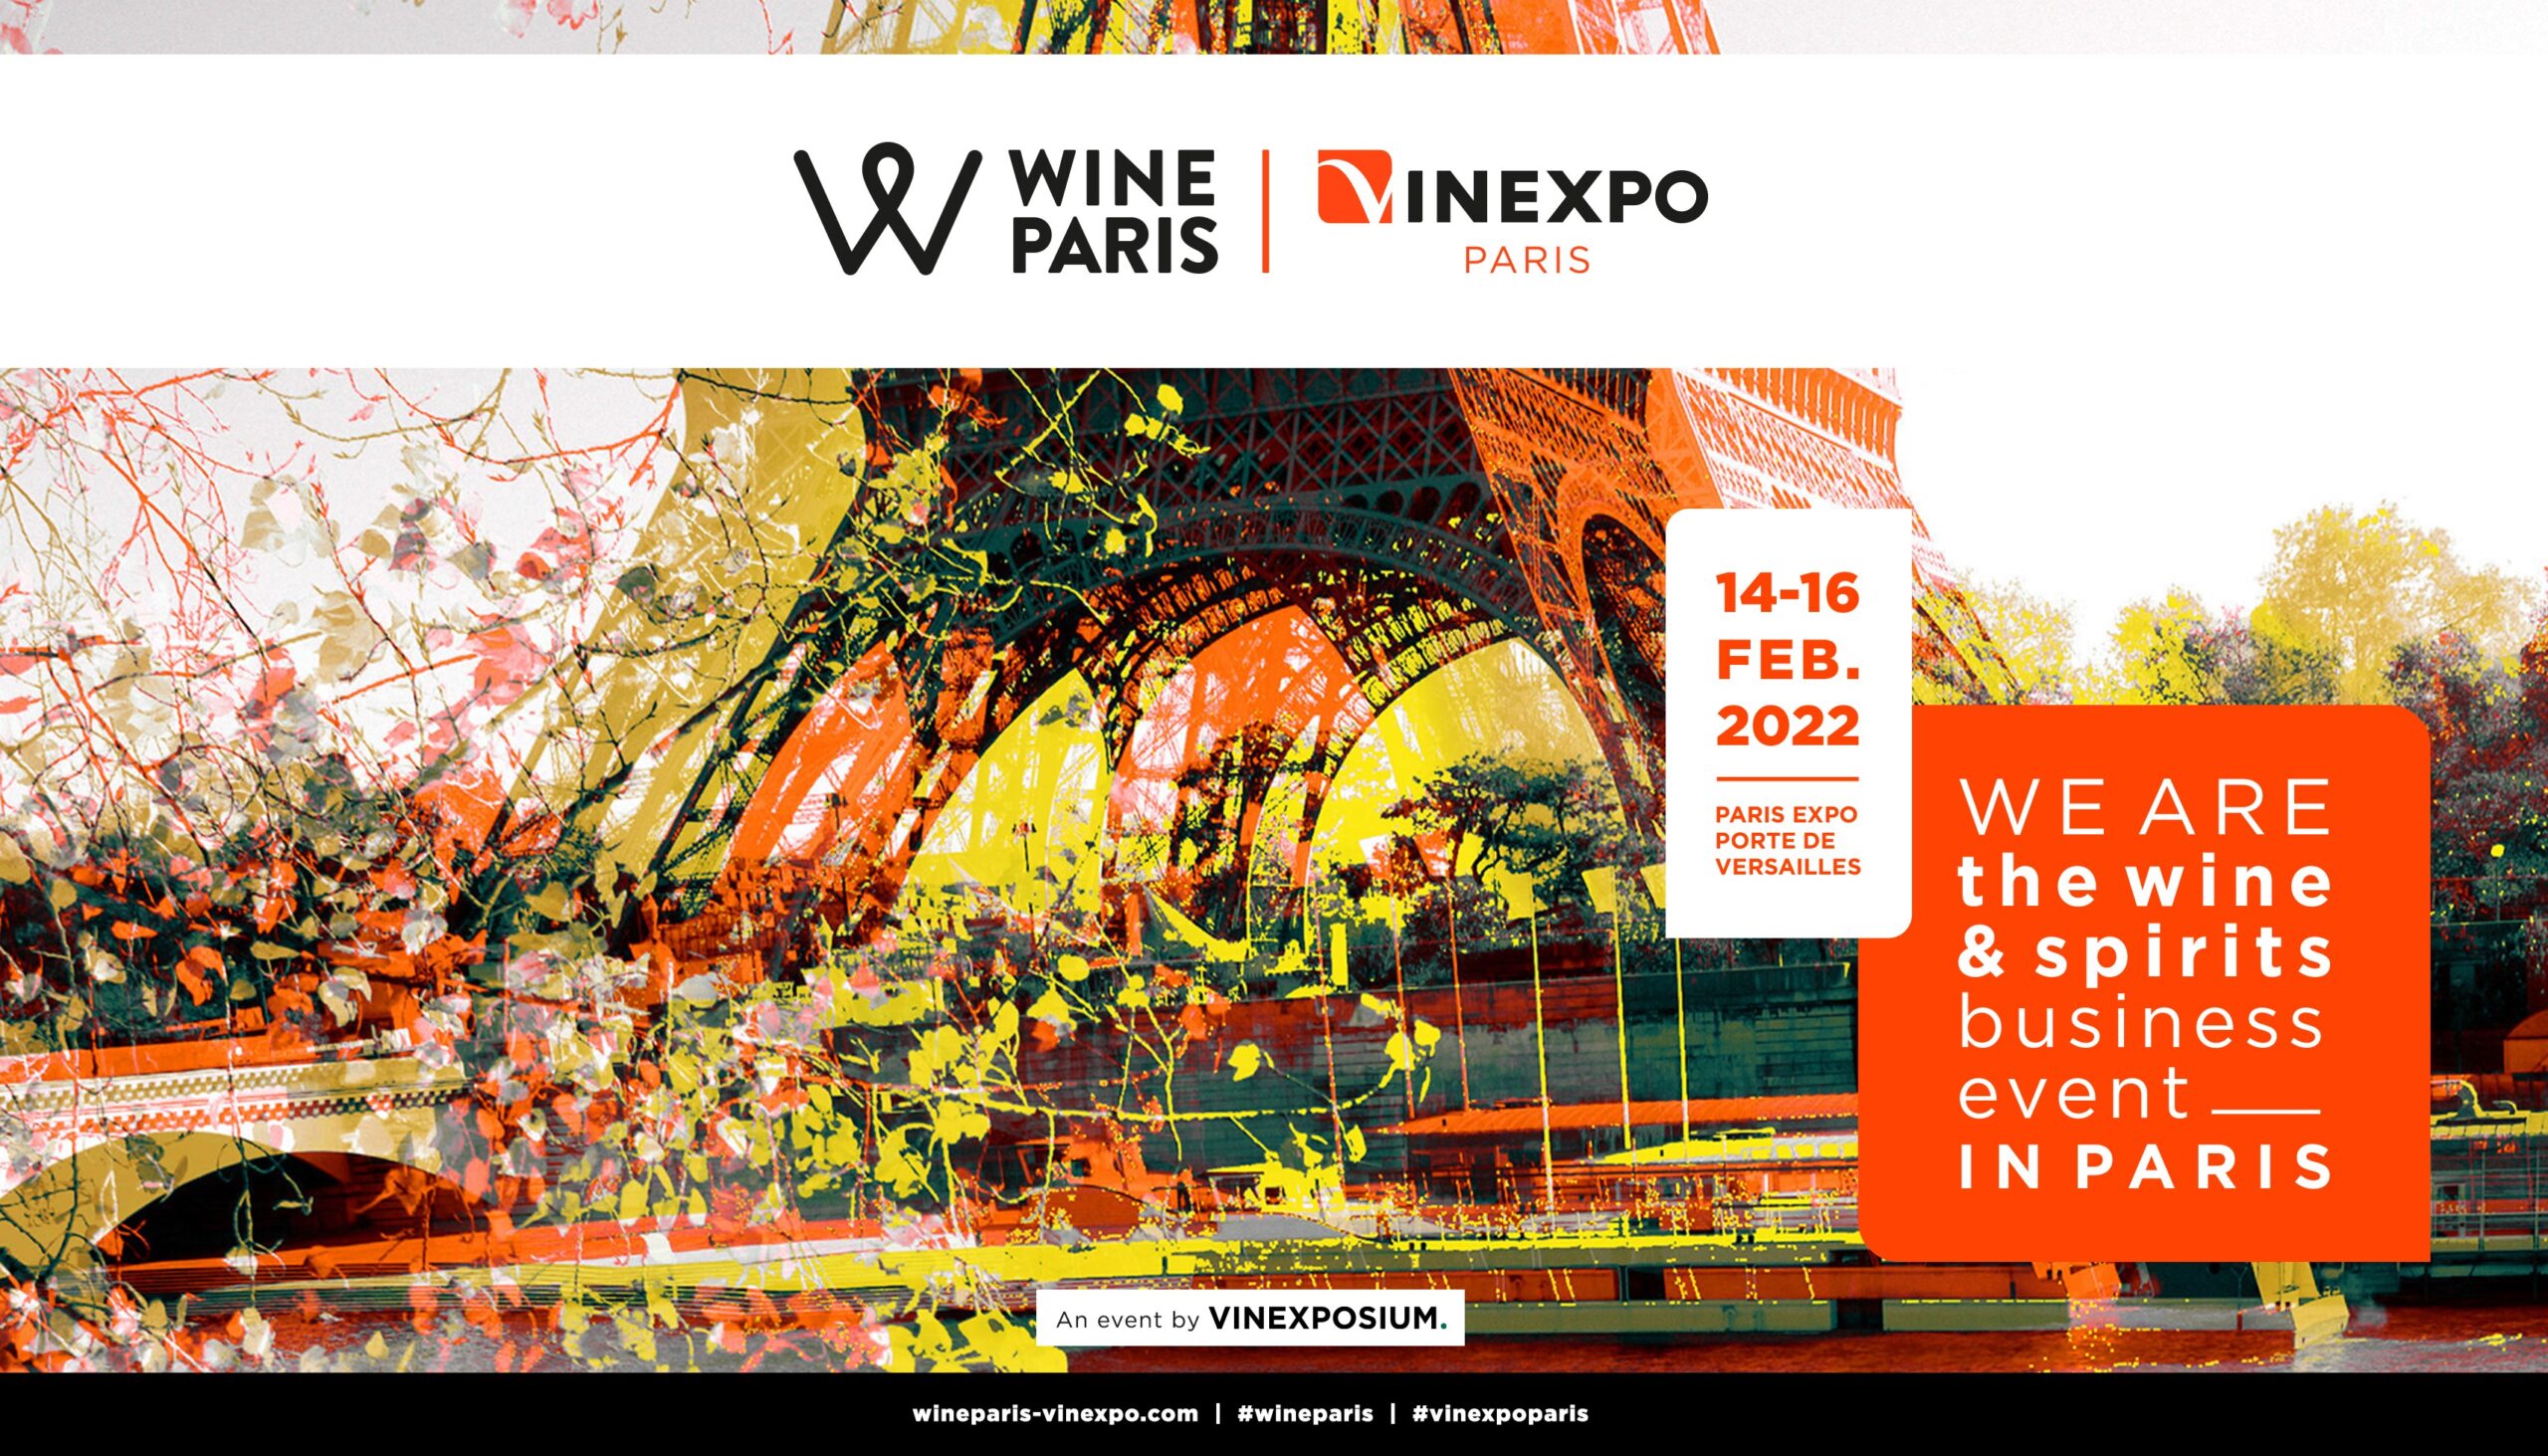 Geslaagde editie Wine Paris & Vinexpo Paris